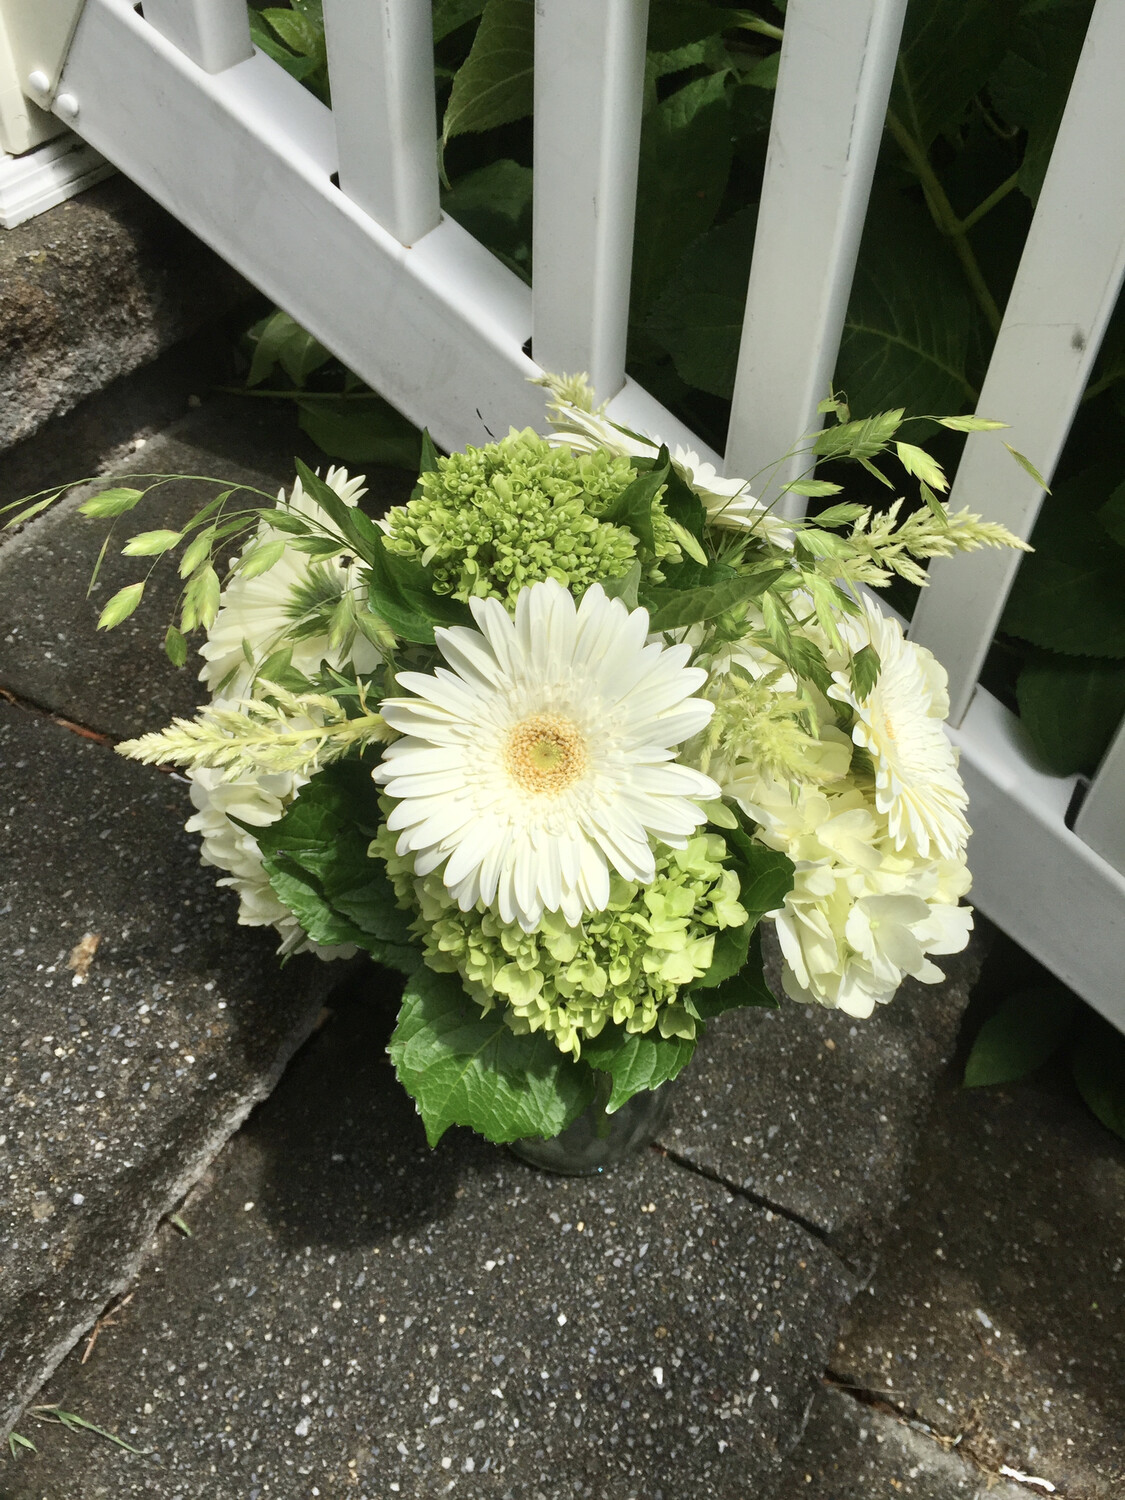 $50 Seasonal Fresh Flower Vase Arrangement